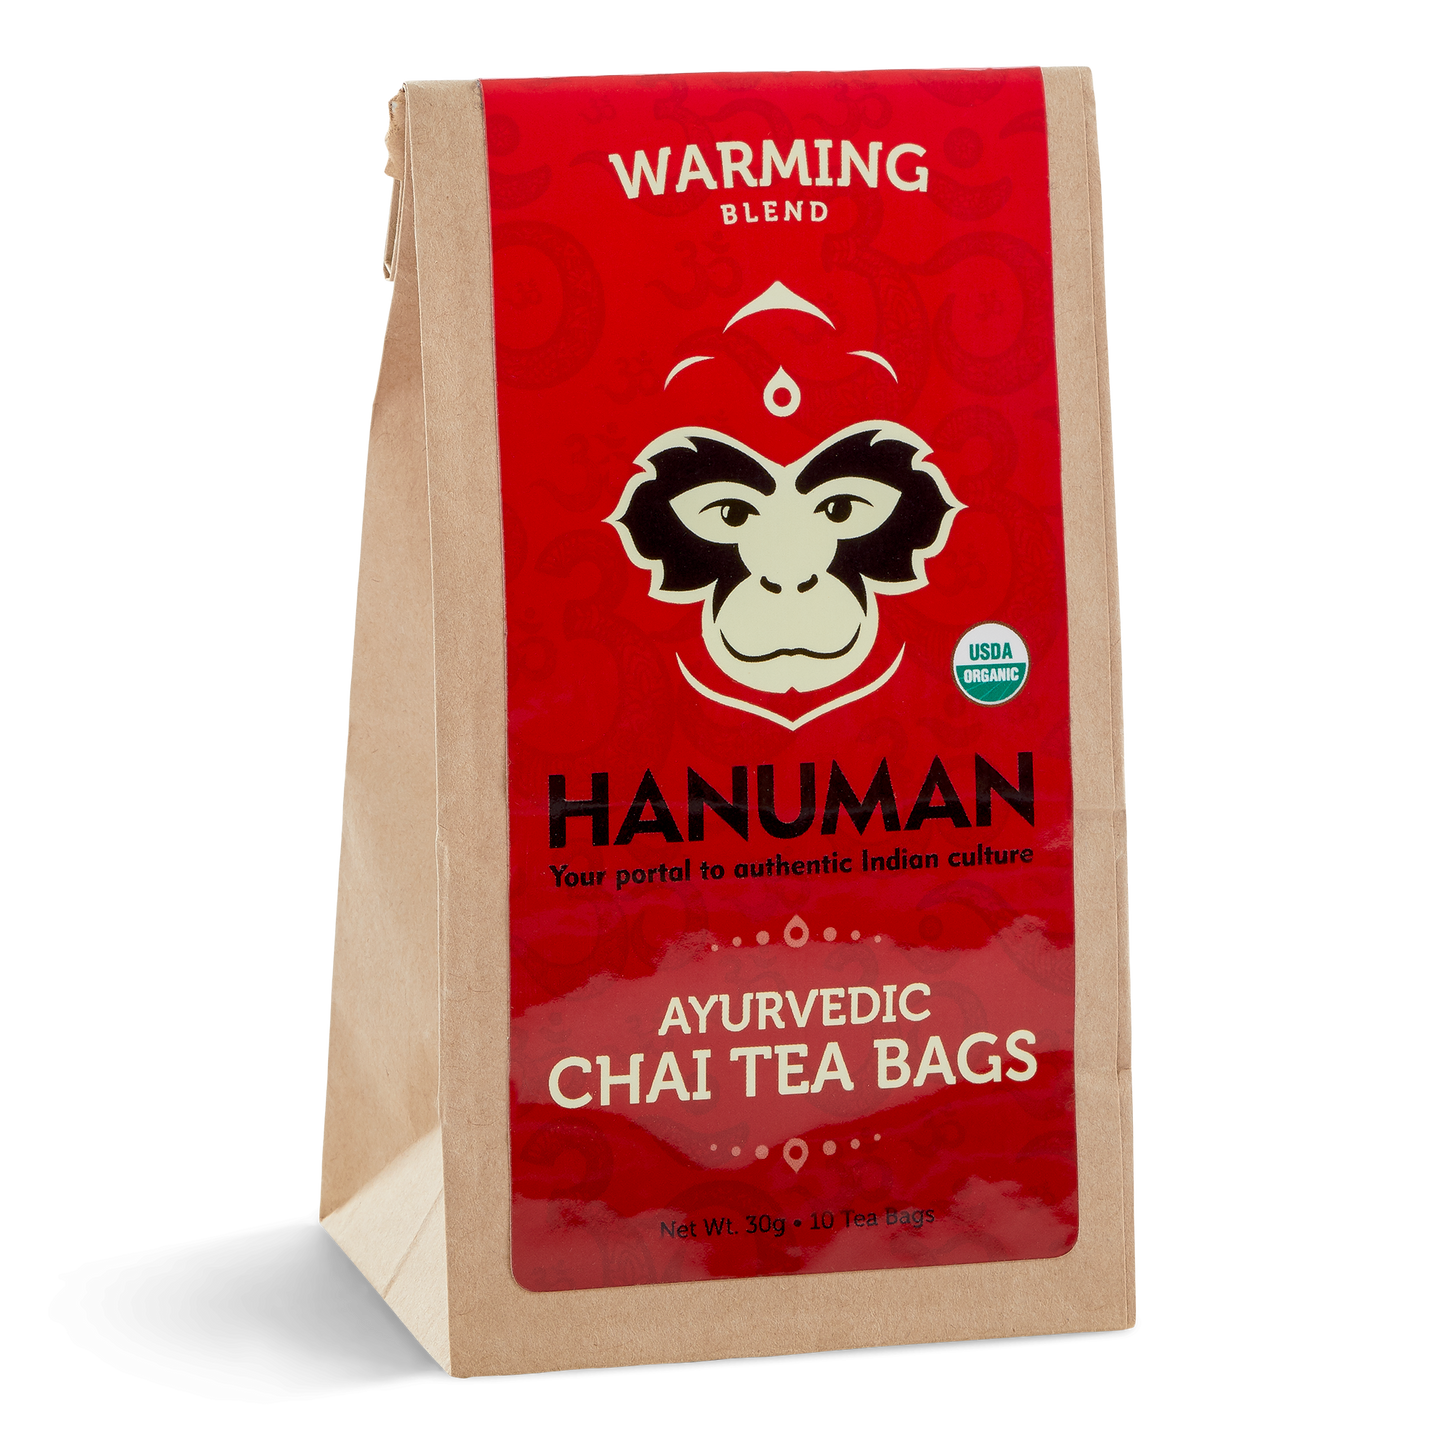 Ayurvedic & Organic Tea Bags: Warming (Caffeinated)